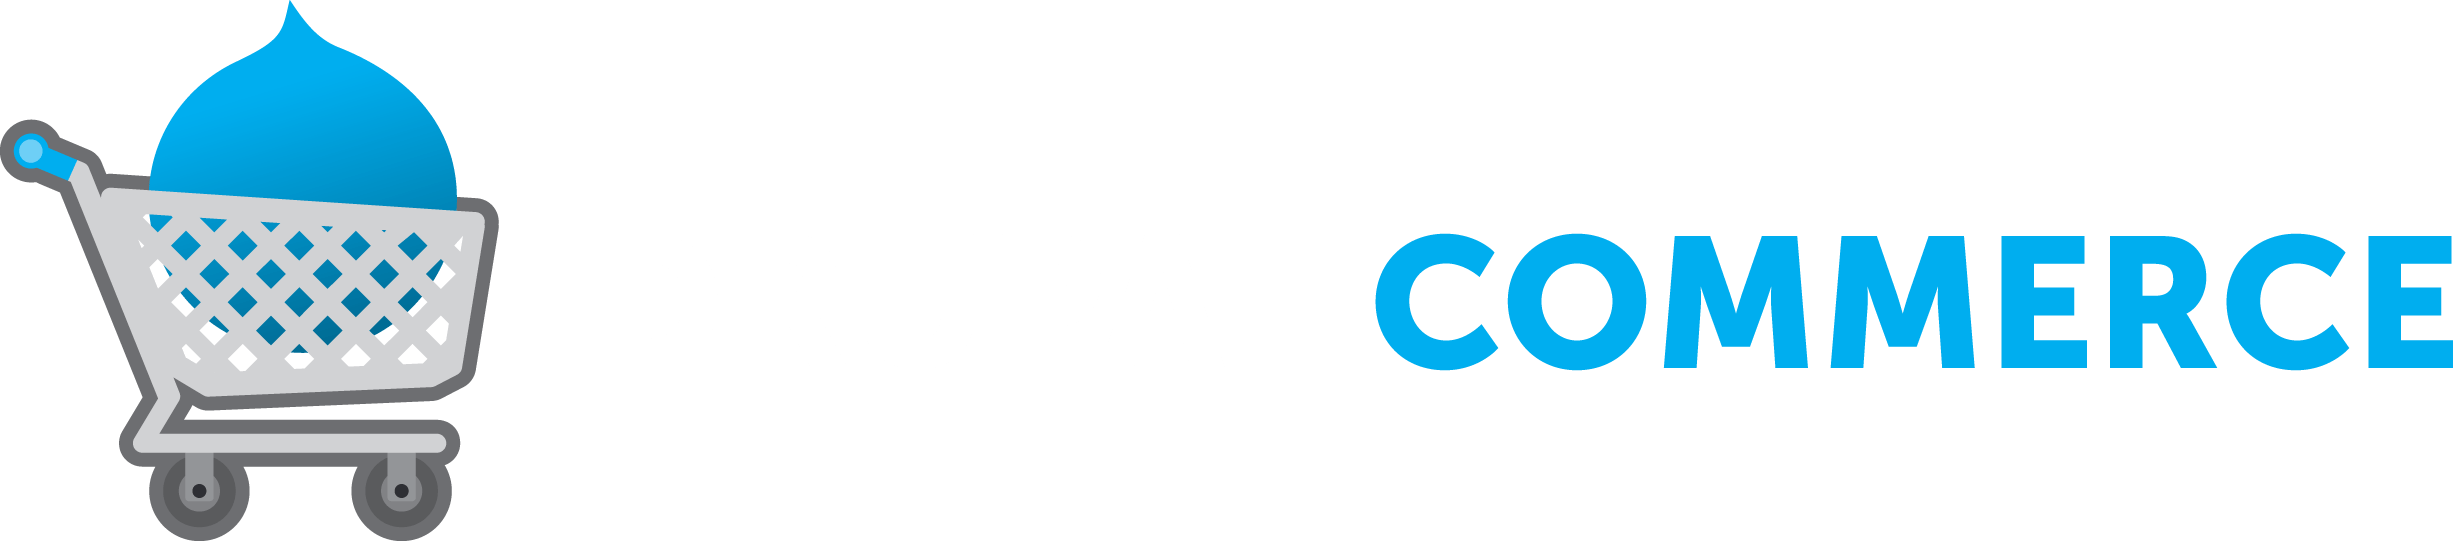 Commerce Logo - Drupal Commerce Marketing Resources | Drupal Commerce